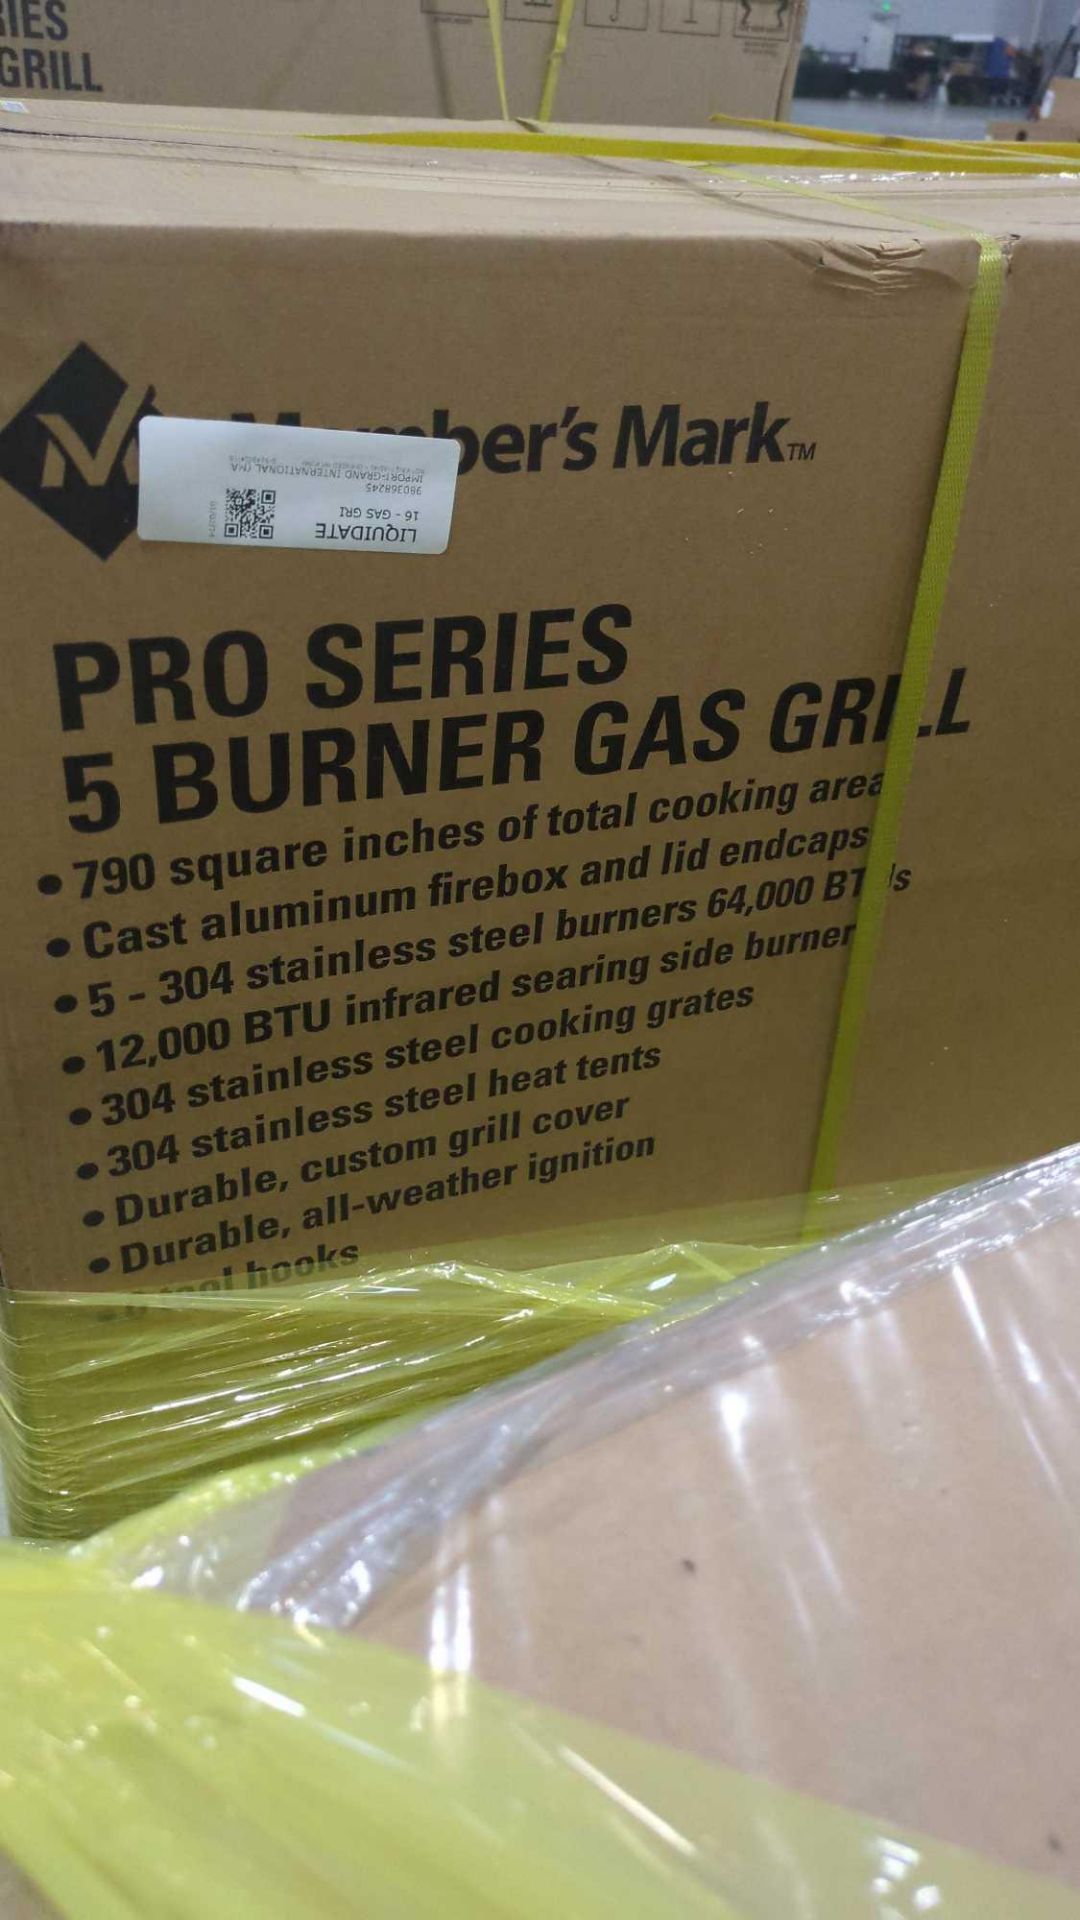 Members Mark Pro Series 5 Burner Gas Grill